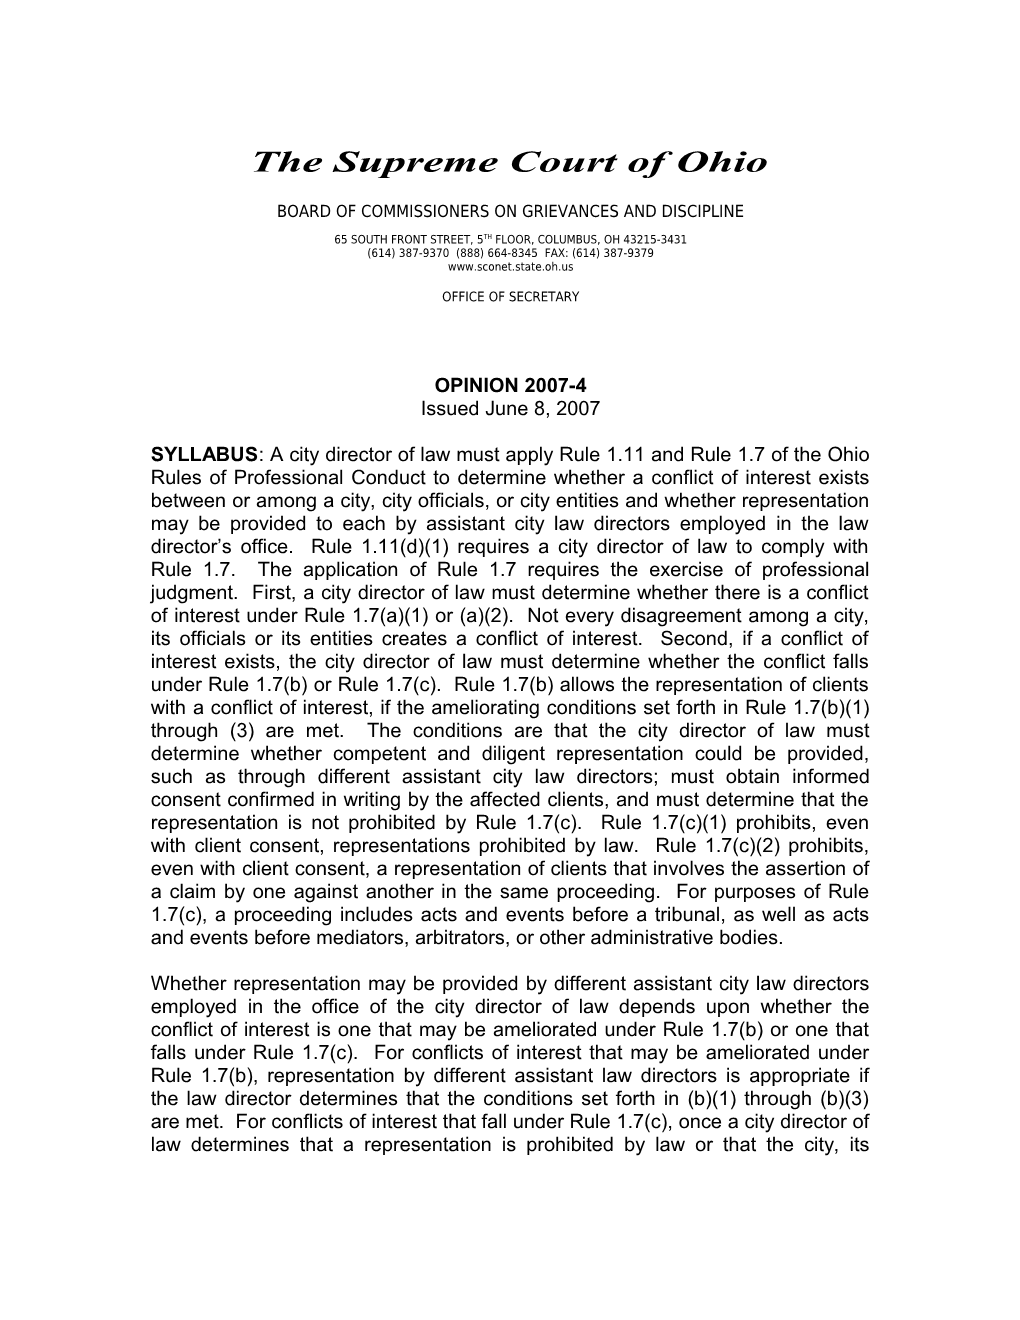 The Supreme Court of Ohio s16